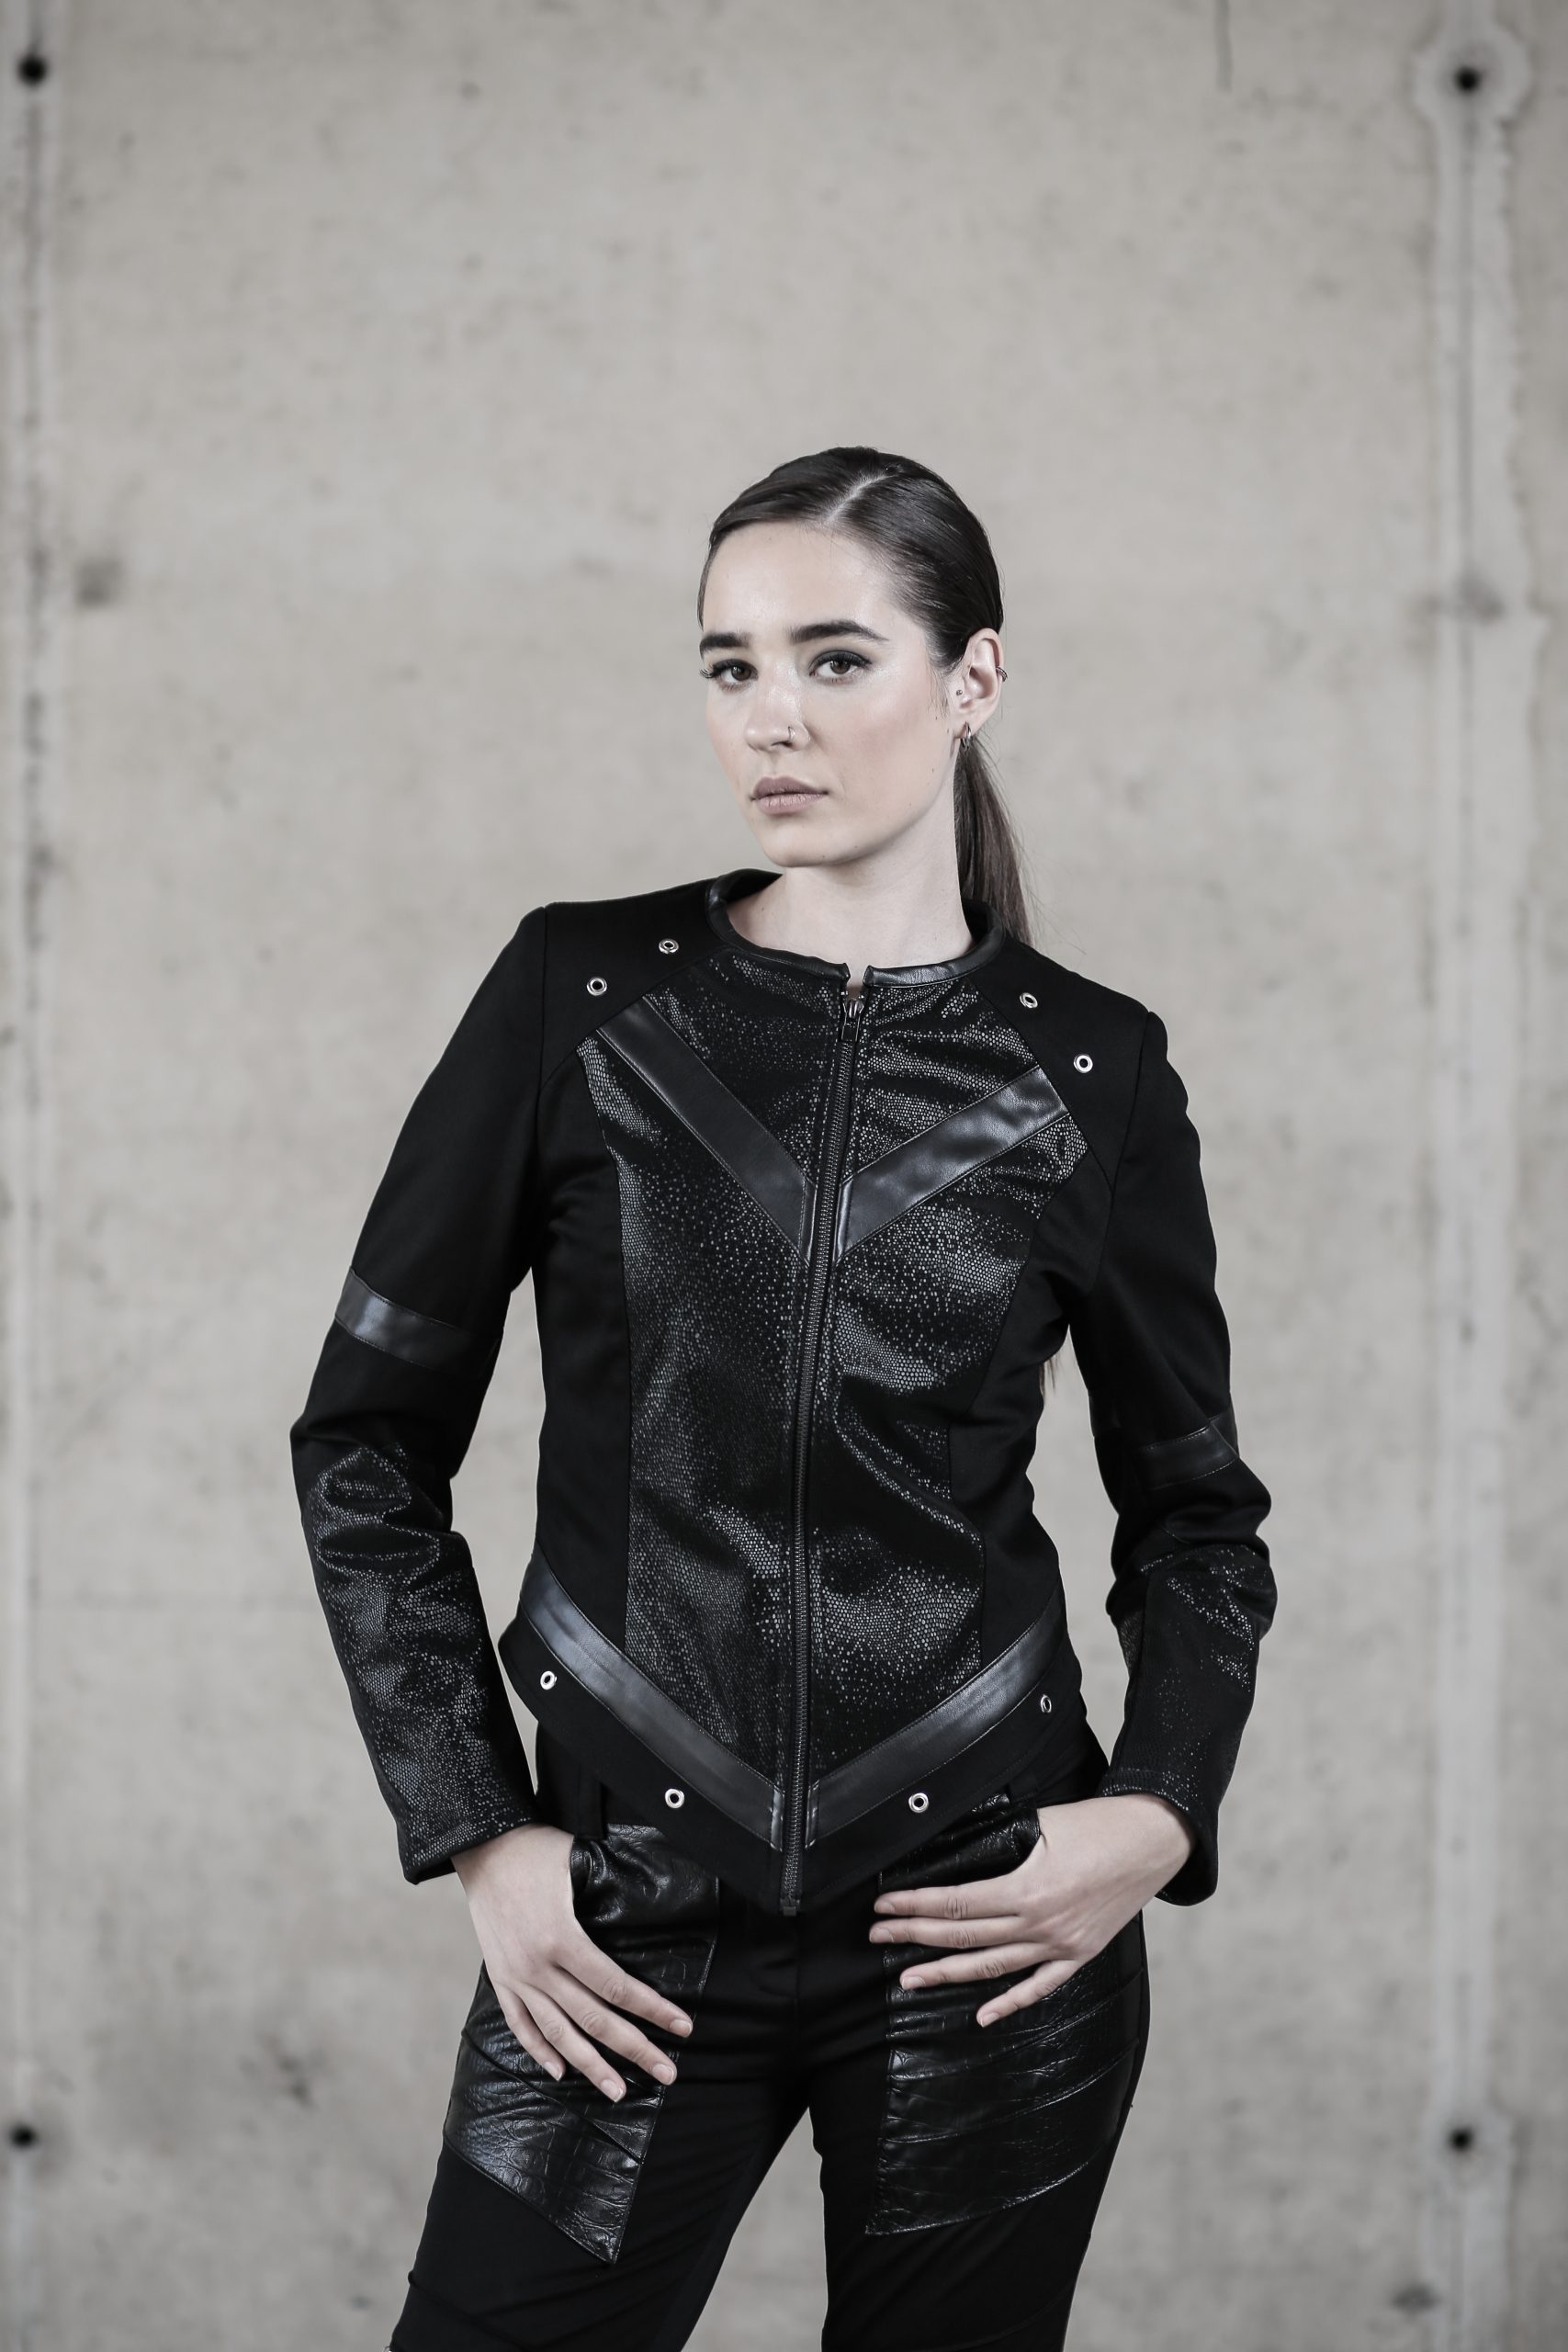 Blackstar Jacket - KaliRose Clothing